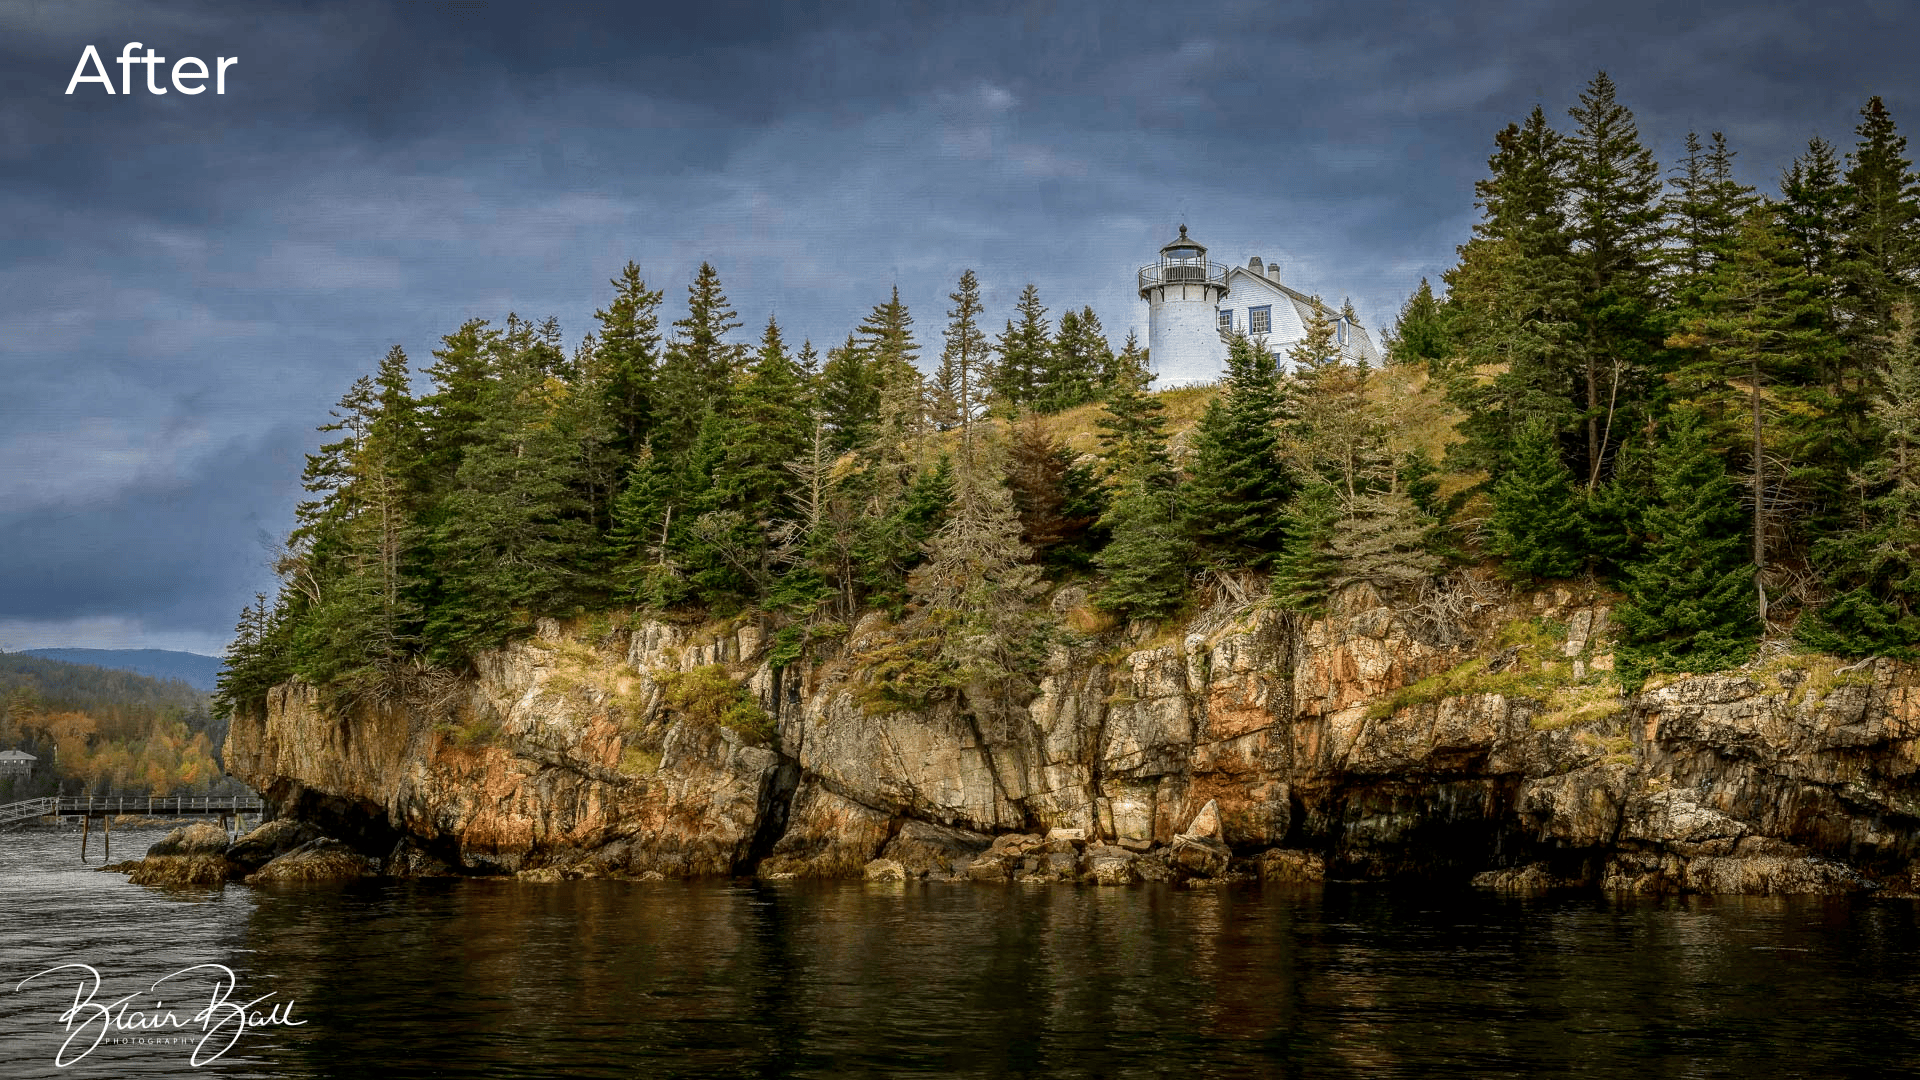 Maine Coastal Lighthouse - After - ©Blair Ball Photography Image